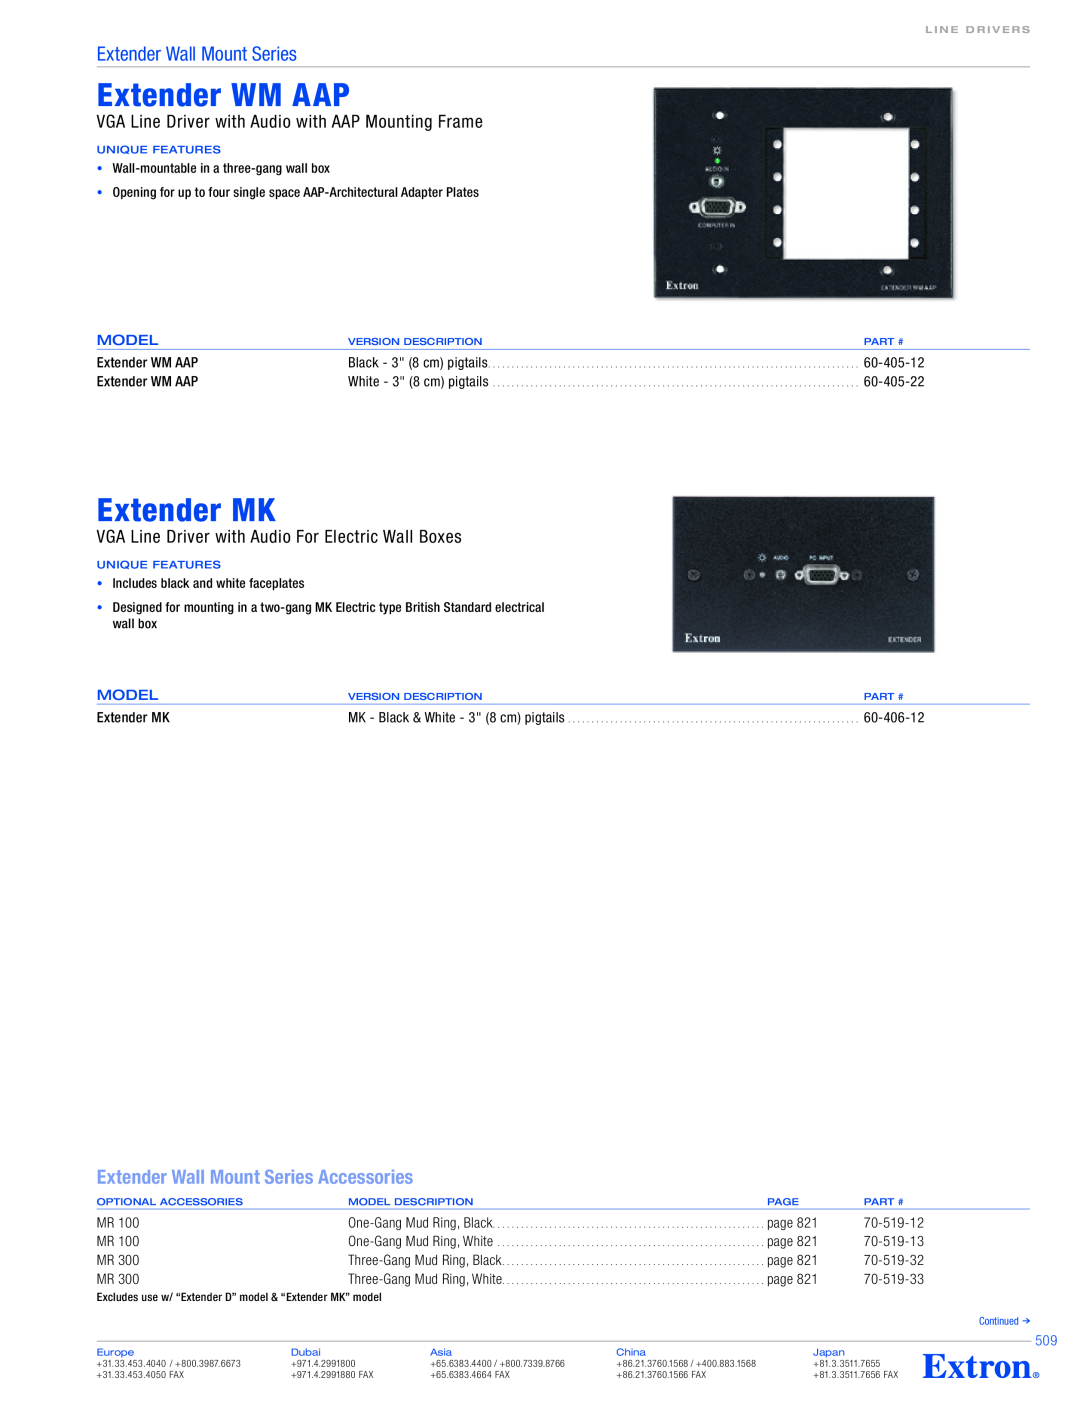 Extron electronic Extender Wall Mount Series specifications Extender WM AAP, Extender MK, 60-406-12, Model 